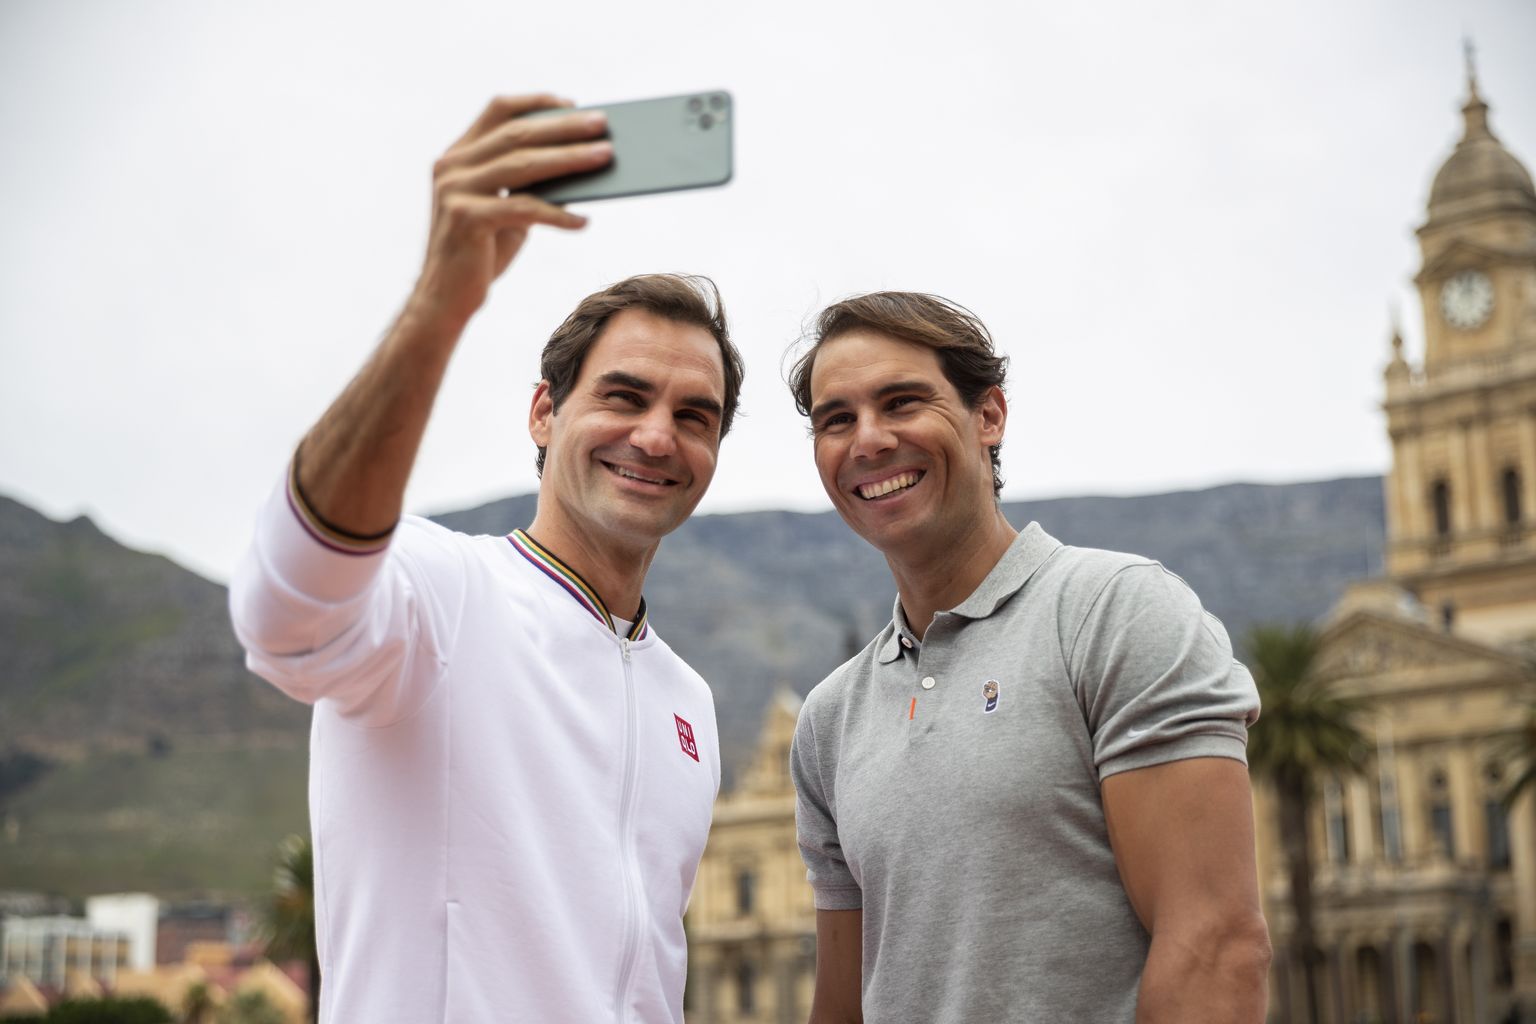 Tenisa leģendas Rodžers Federers un Rafaels Nadals